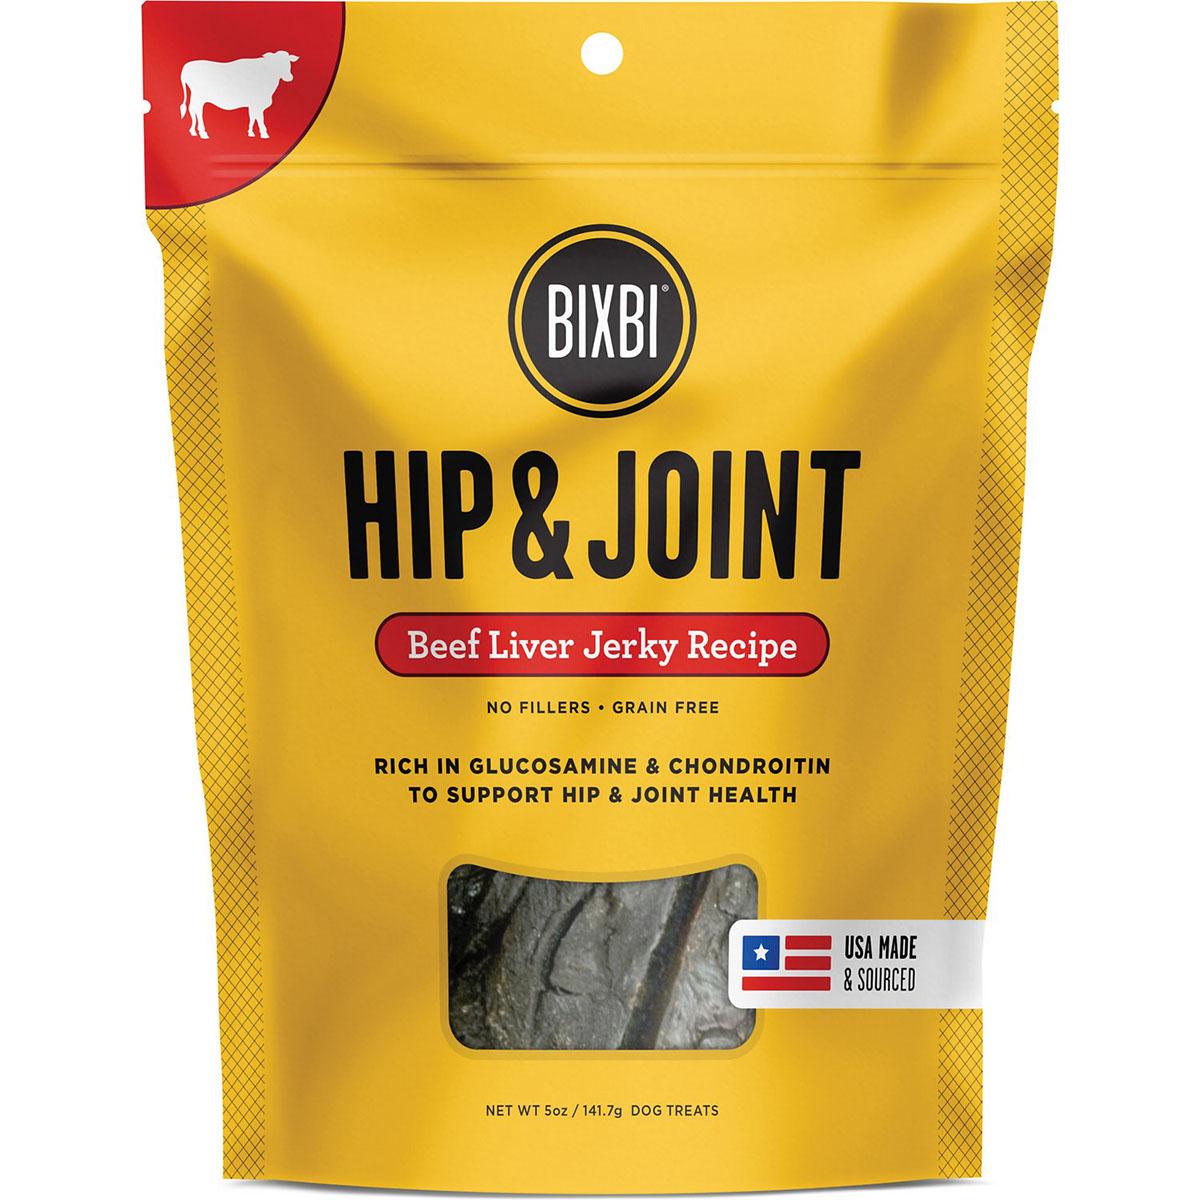 BIXBI Hip & Joint Beef Liver Jerky Recipe Dog Treats